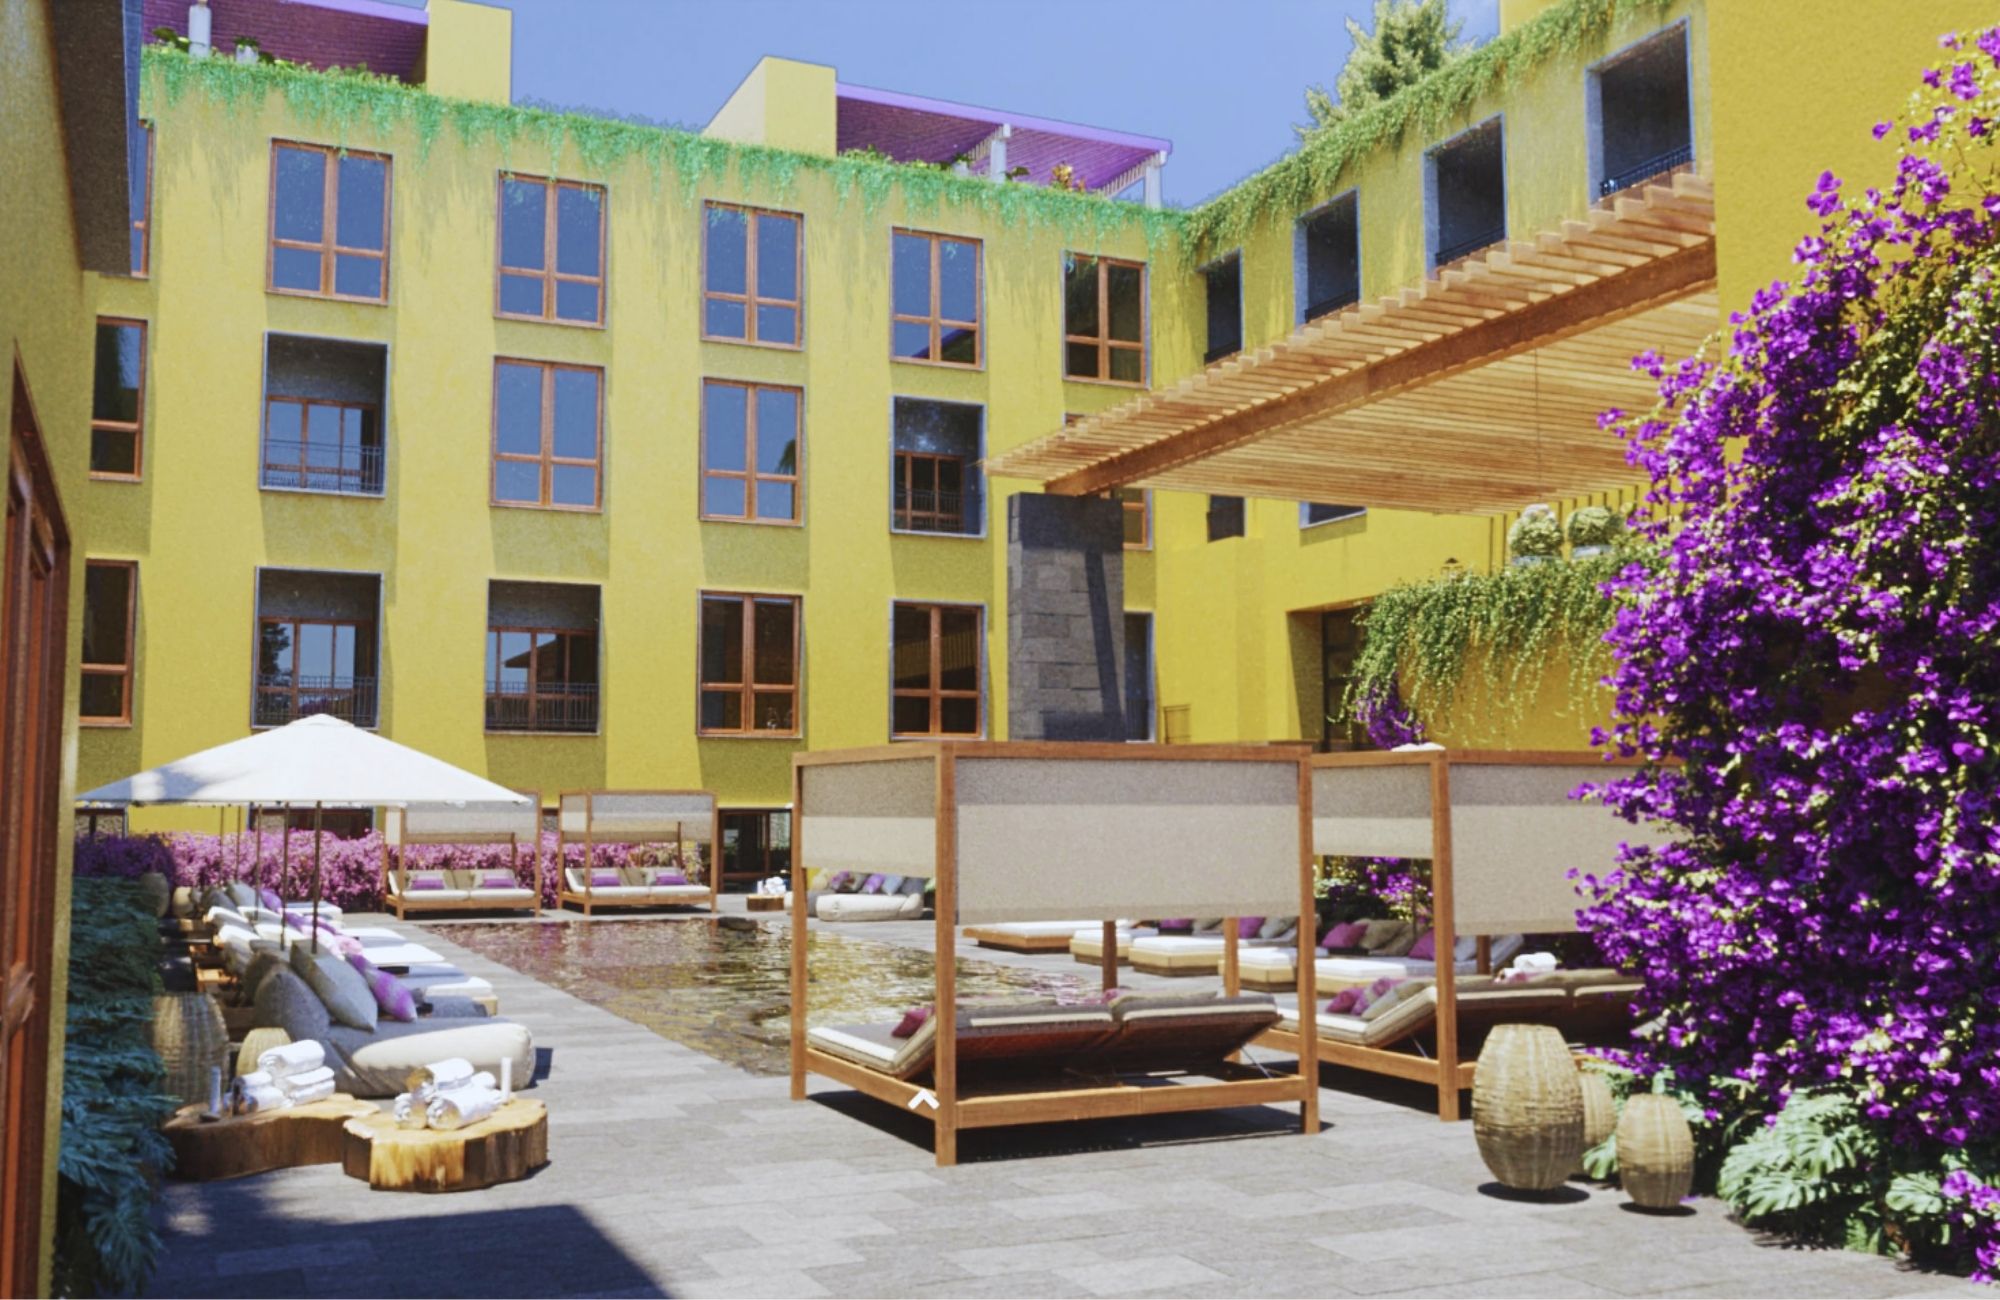 Luxury apartment, private terrace, pool, spa, for sale San Miguel de Allende.